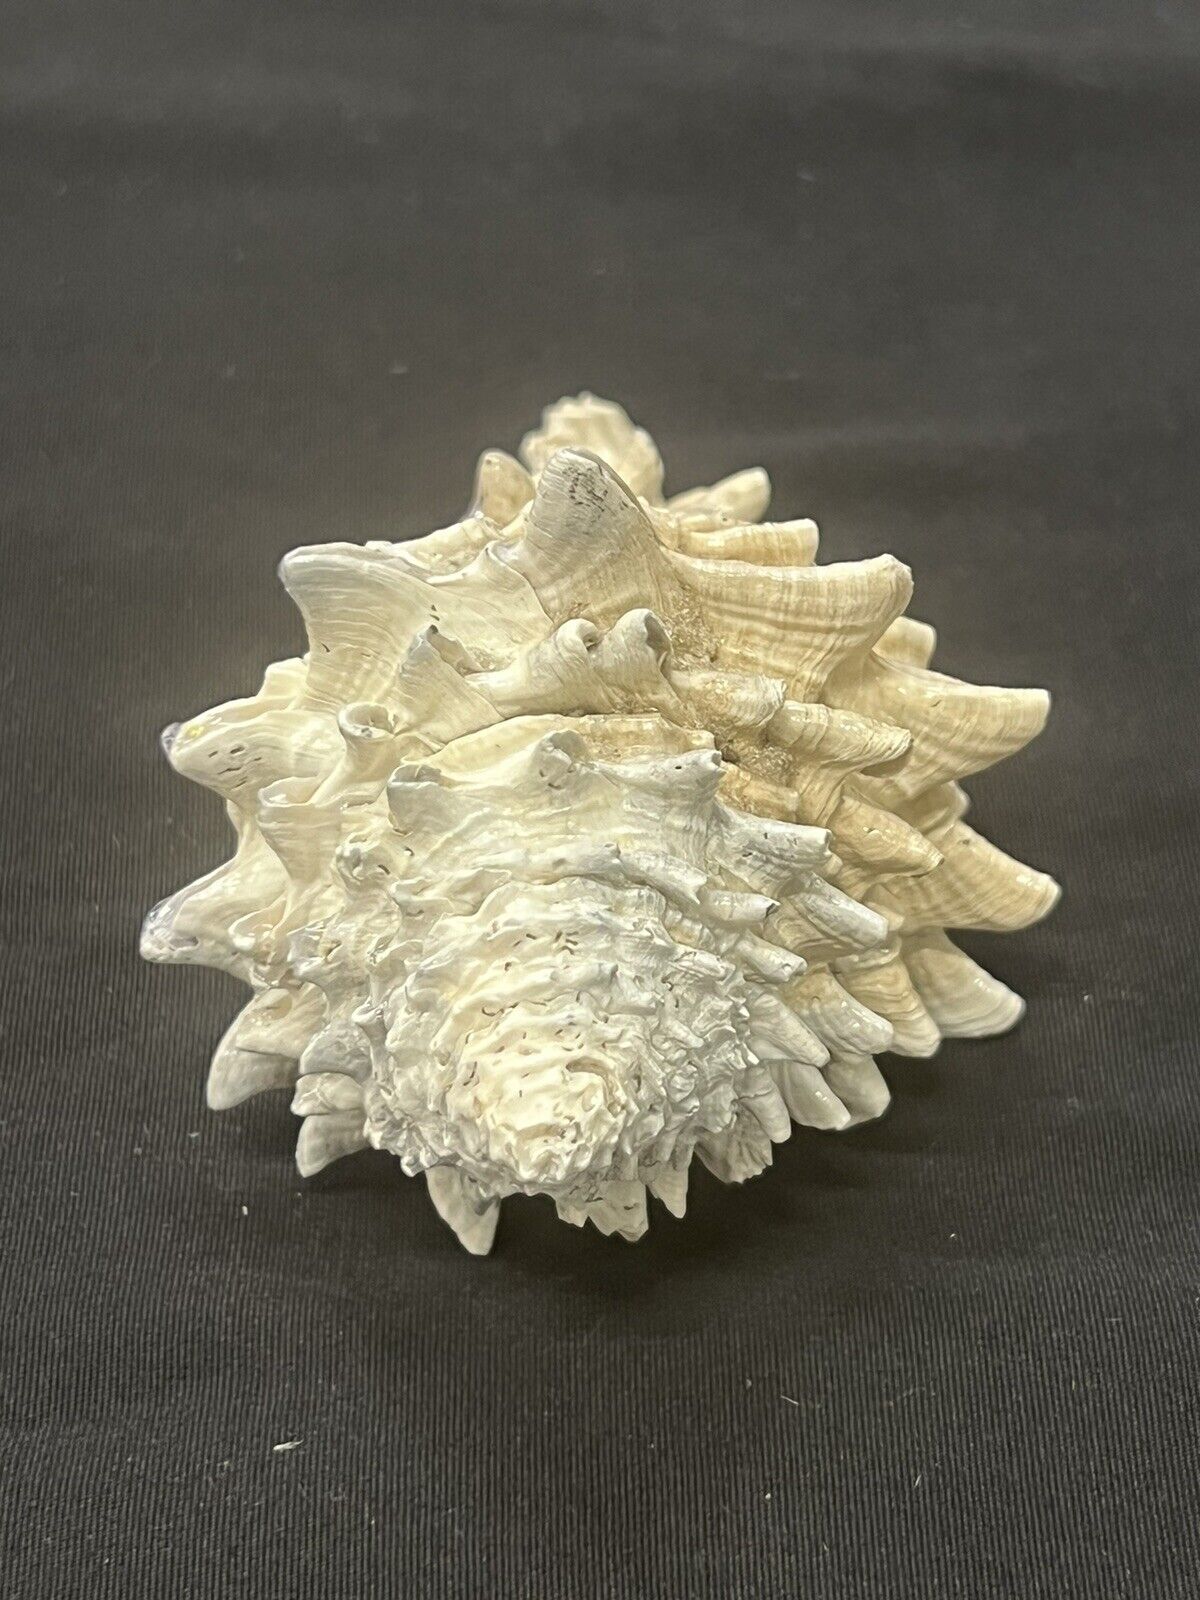 RARE Fossilized VASE Shell From Central Florida, Pliocene Era. 